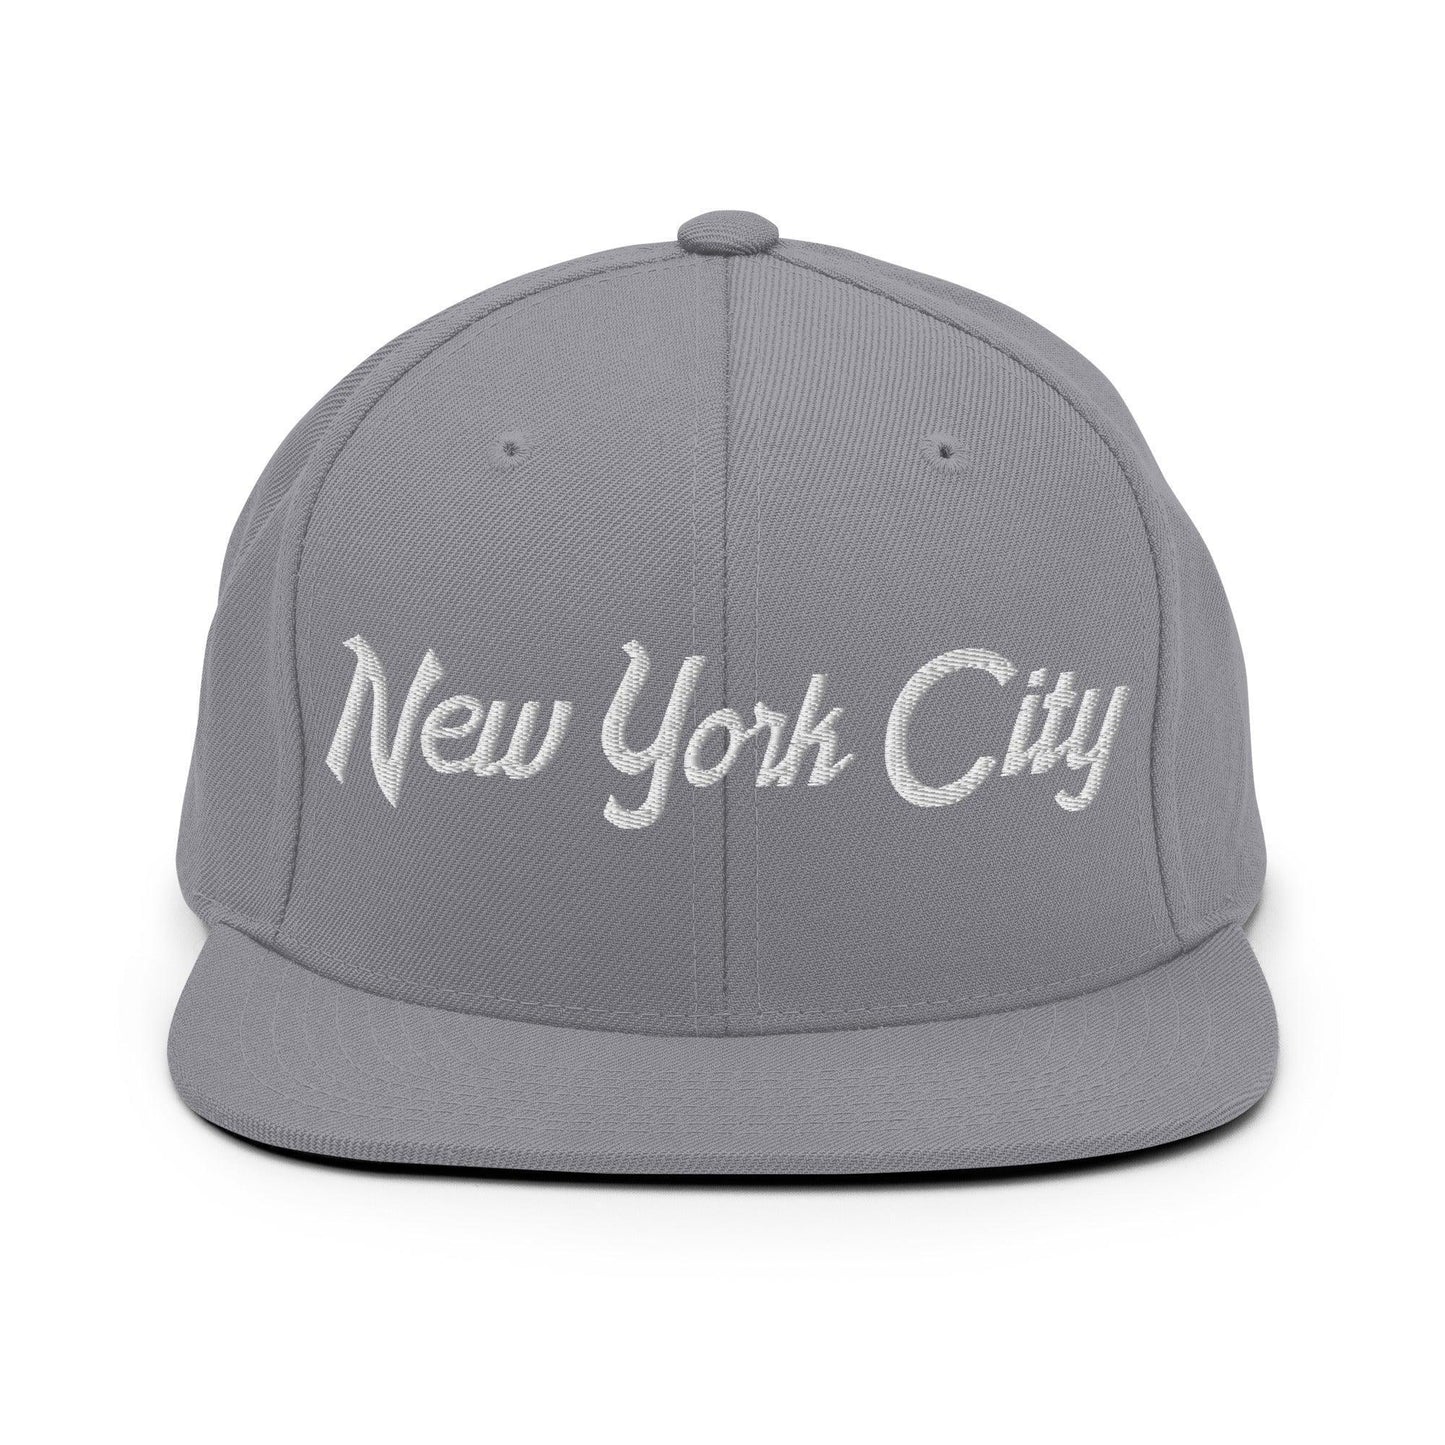 New York City Script Snapback Hat Silver